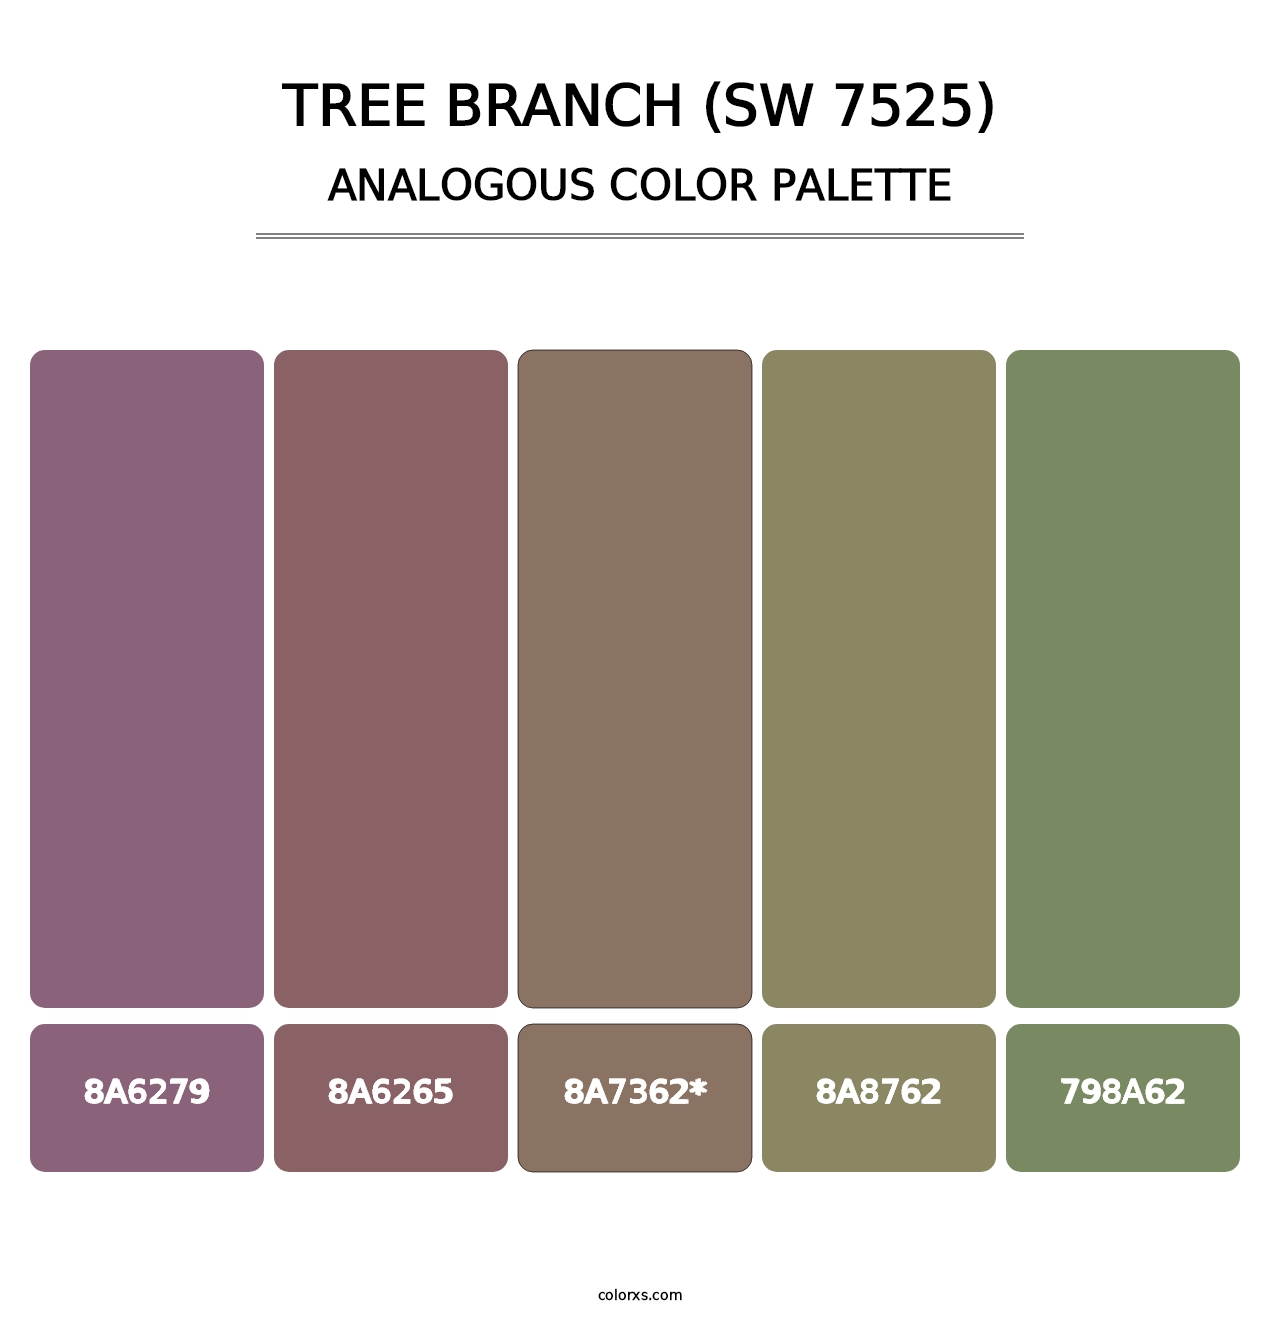 Tree Branch (SW 7525) - Analogous Color Palette